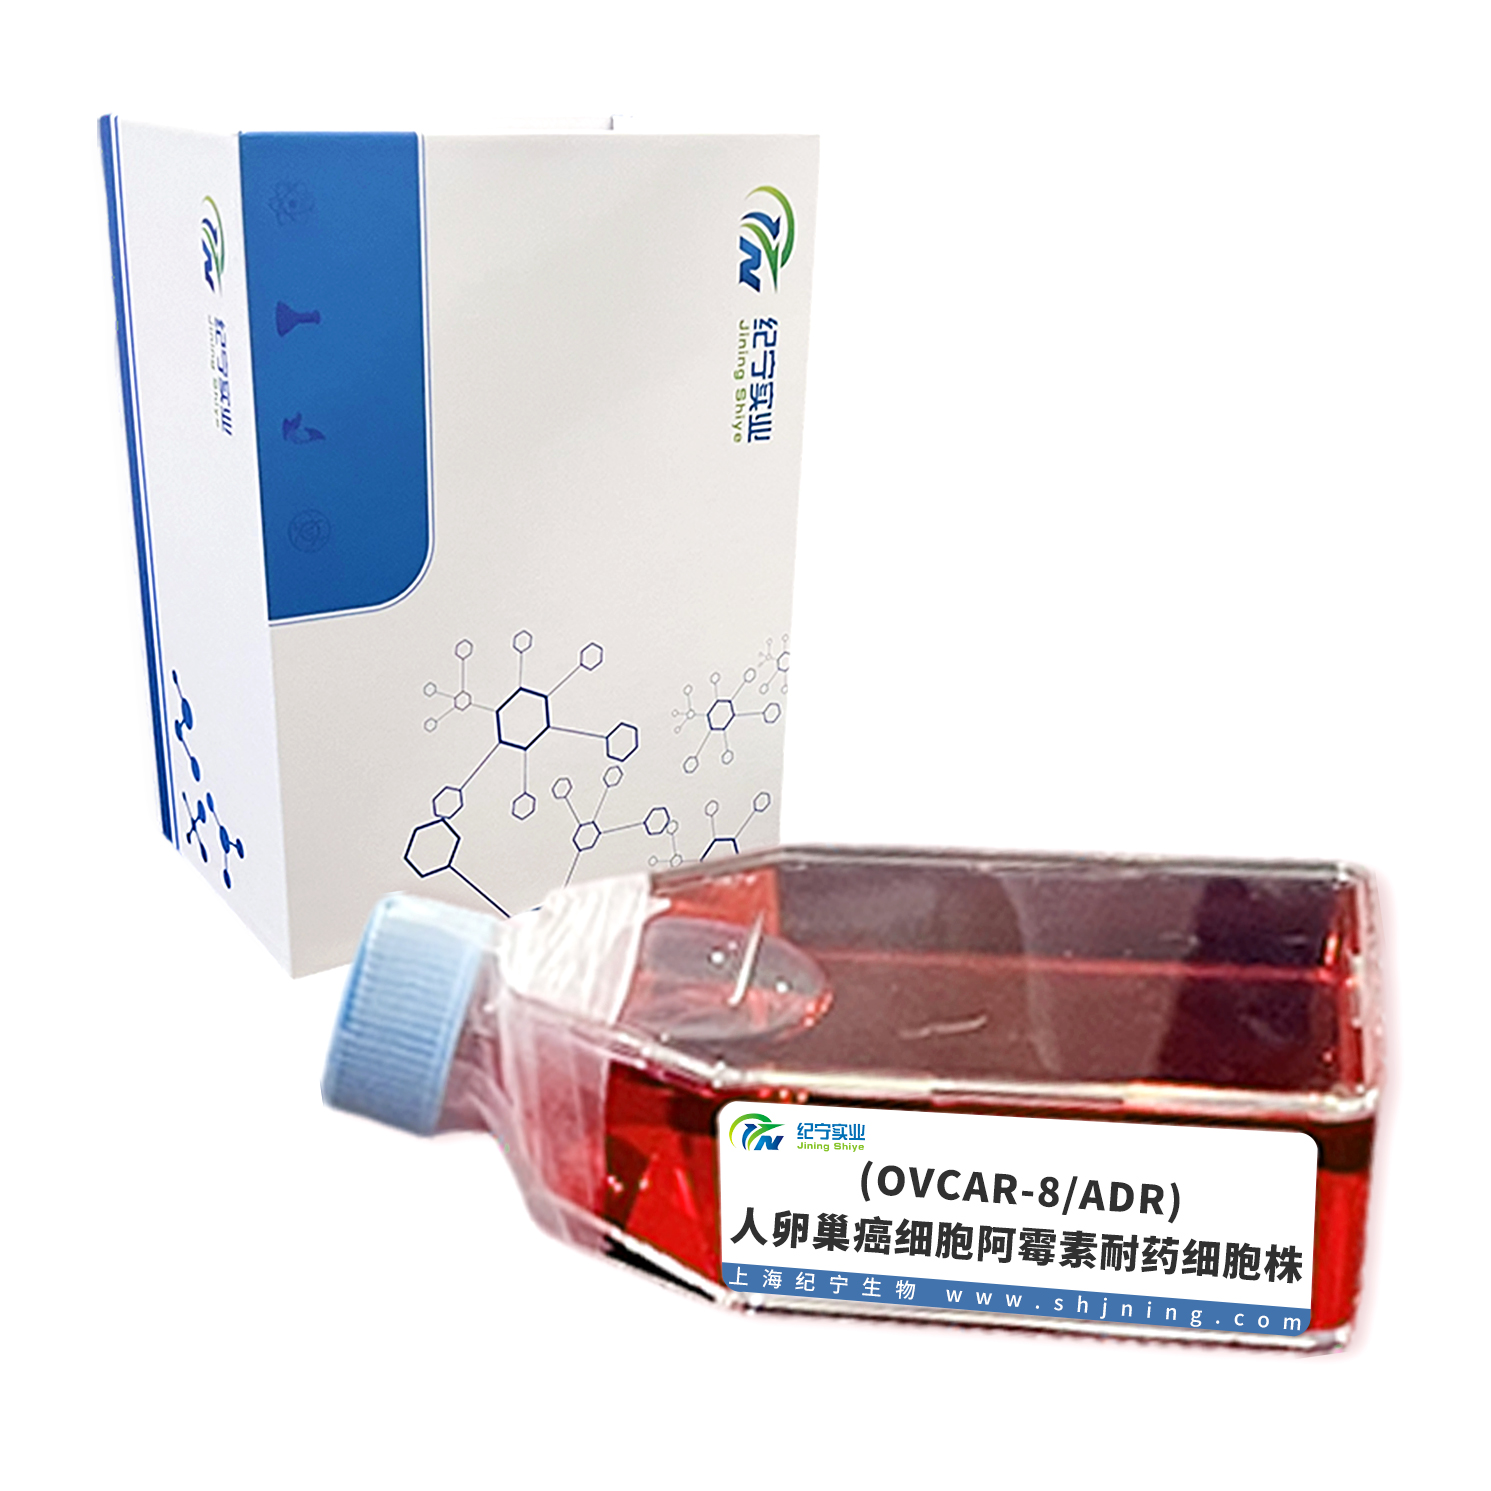 (OVCAR-8/ADR)人卵巢癌细胞阿霉素耐药细胞株